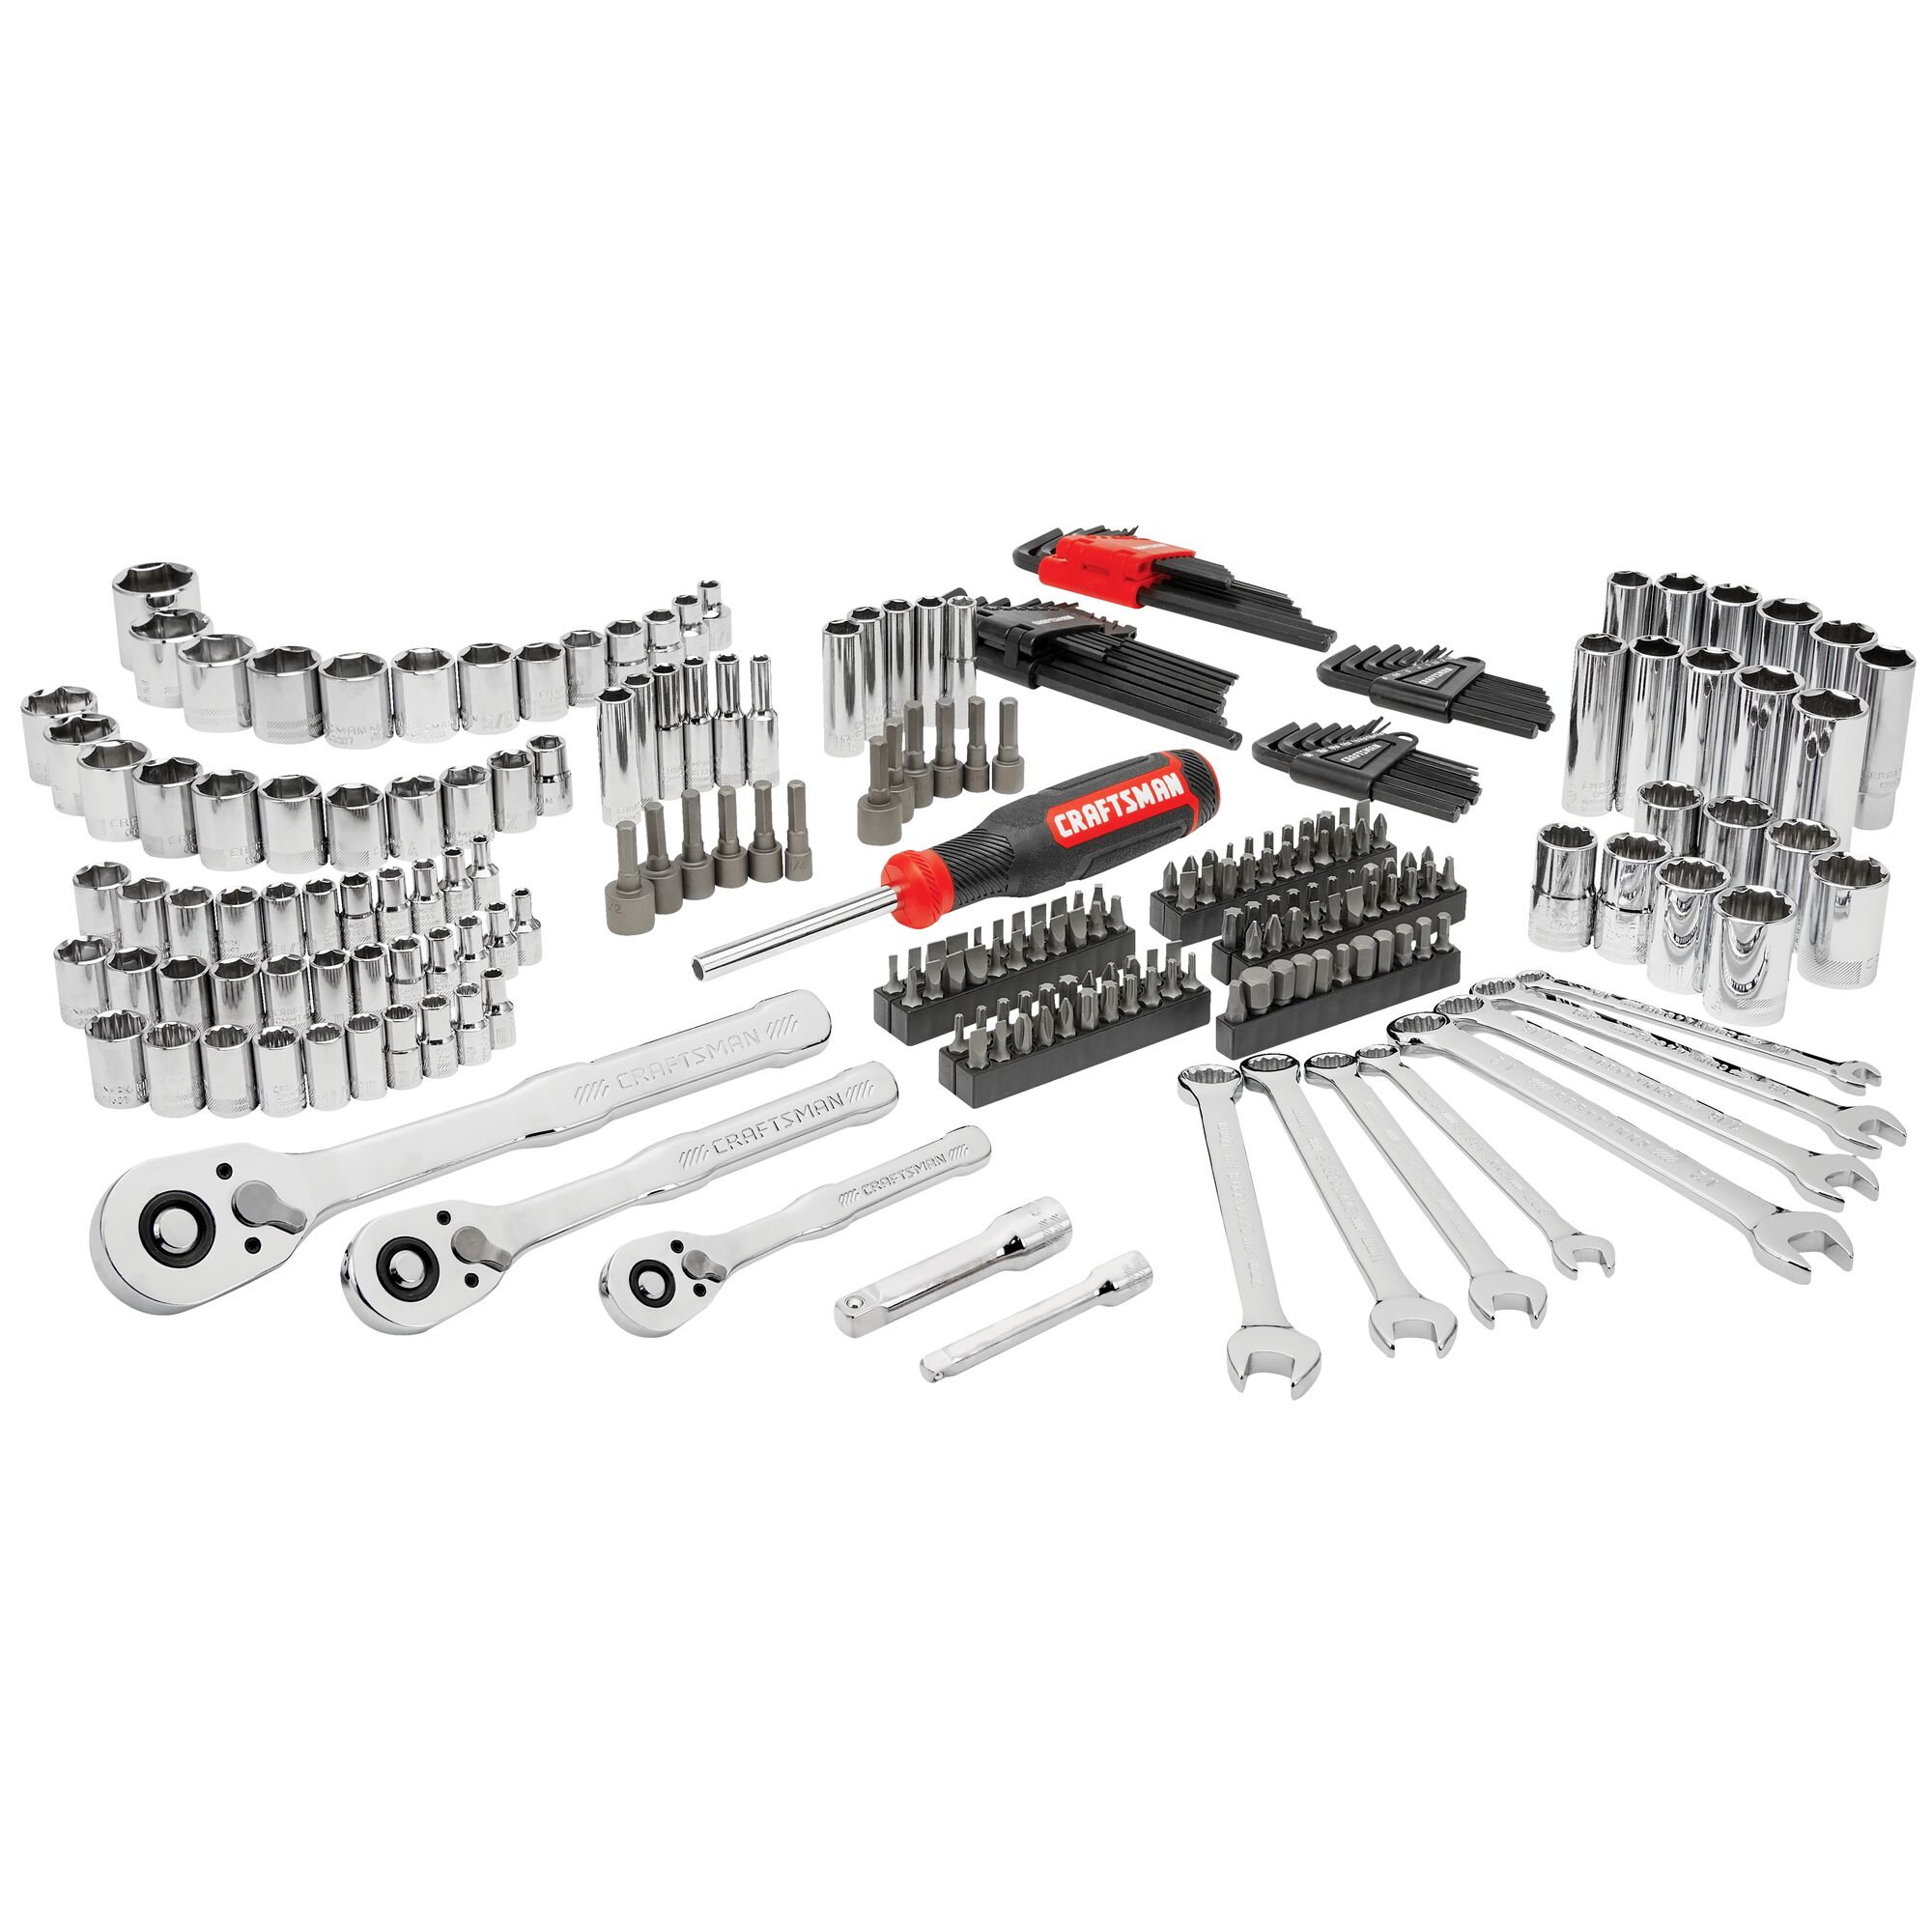 Automotive Trim and Panel Removal Tool Set - 11 Pieces with Bonus